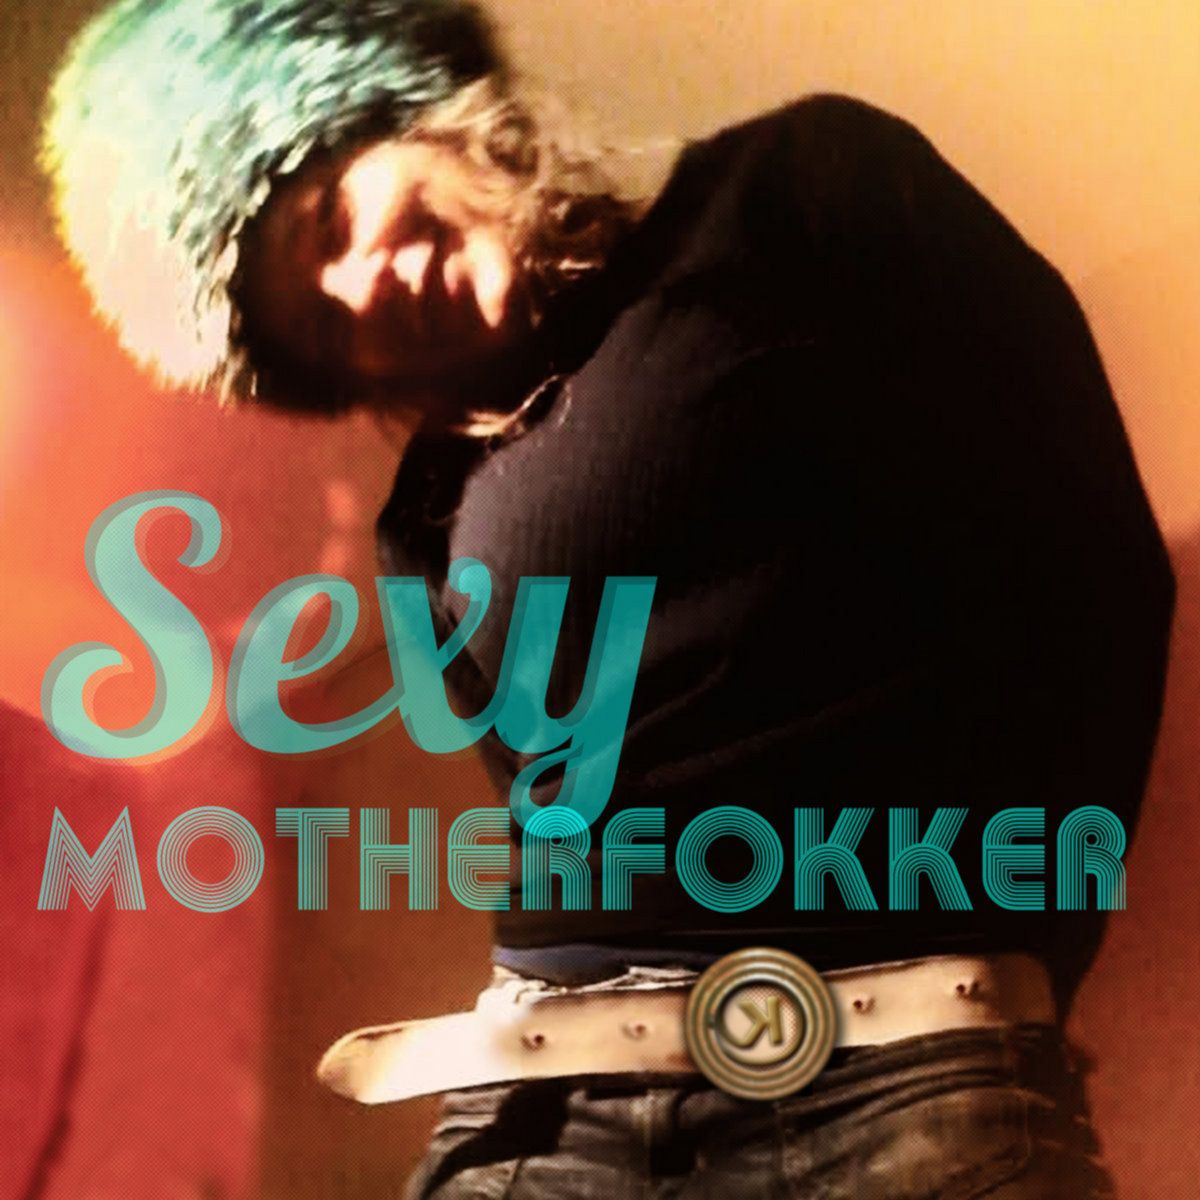 Kat - 'Sexy Motherfokker'